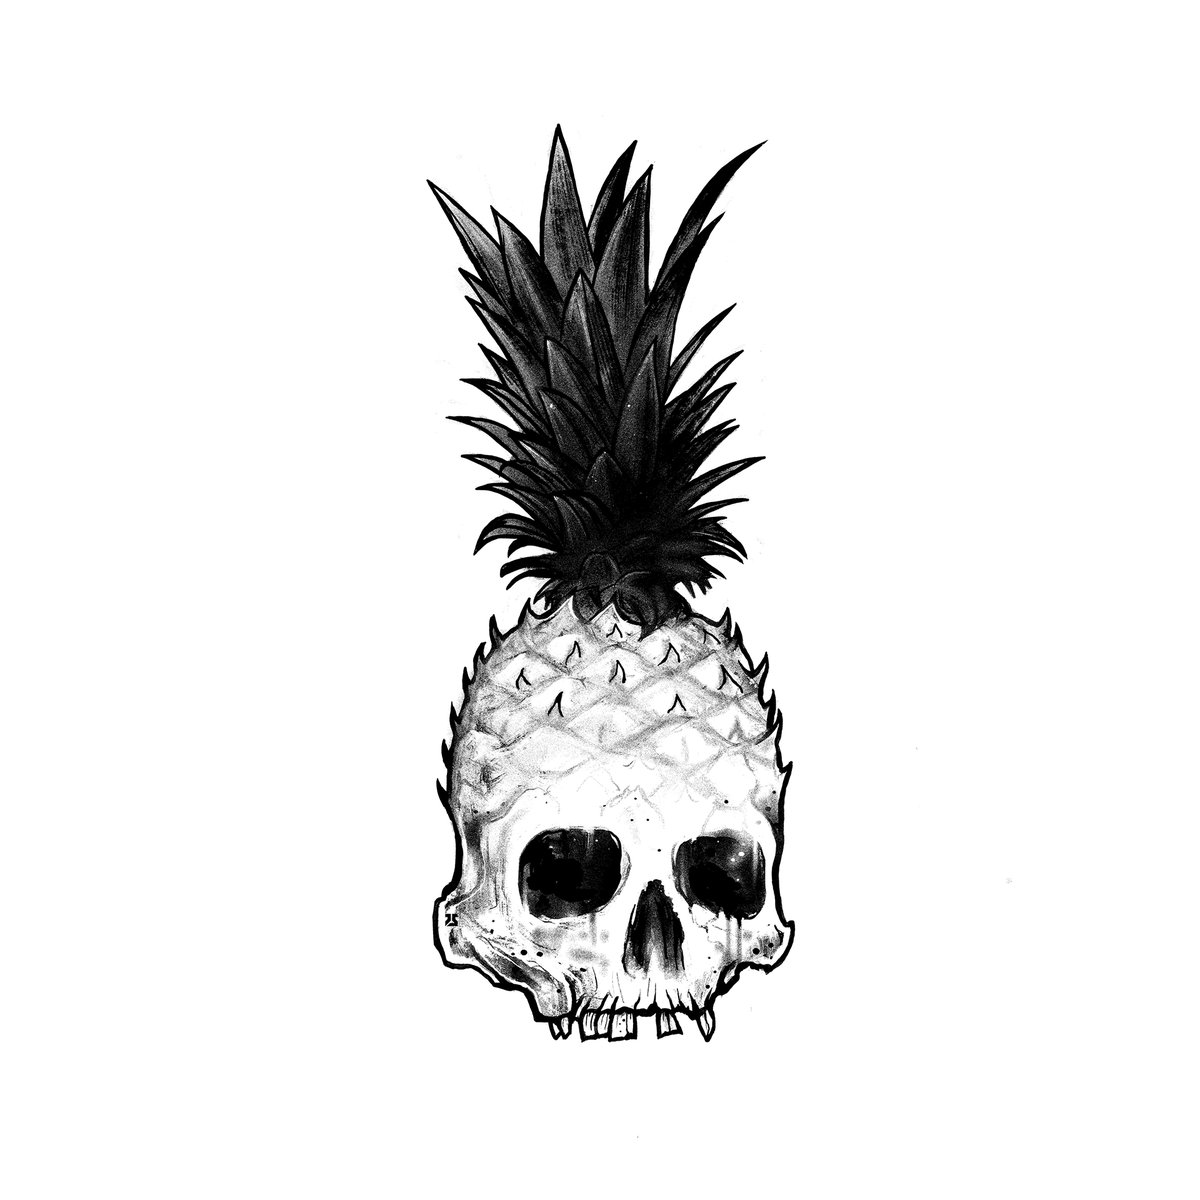 ///NEW WORK///

'Mors Fructus'

#darkartists #thedarkestwork #onlyblackart #illustration #illustrationdaily #blackandwhiteart #tattooart #skull #skullart #pineapple